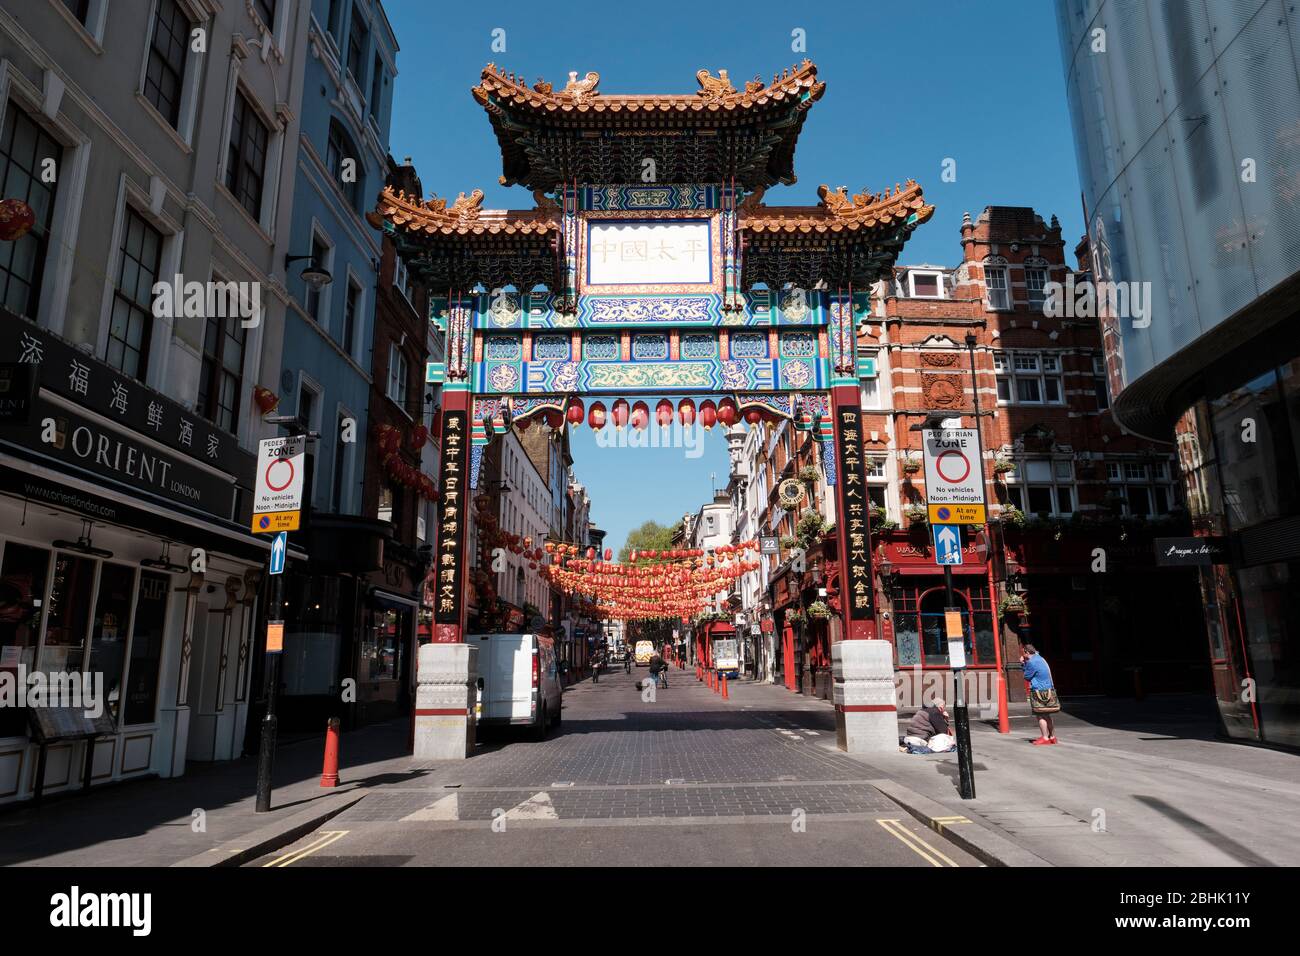 Empty Streets caused by coronavirus lockdown, China Town, London Stock Photo